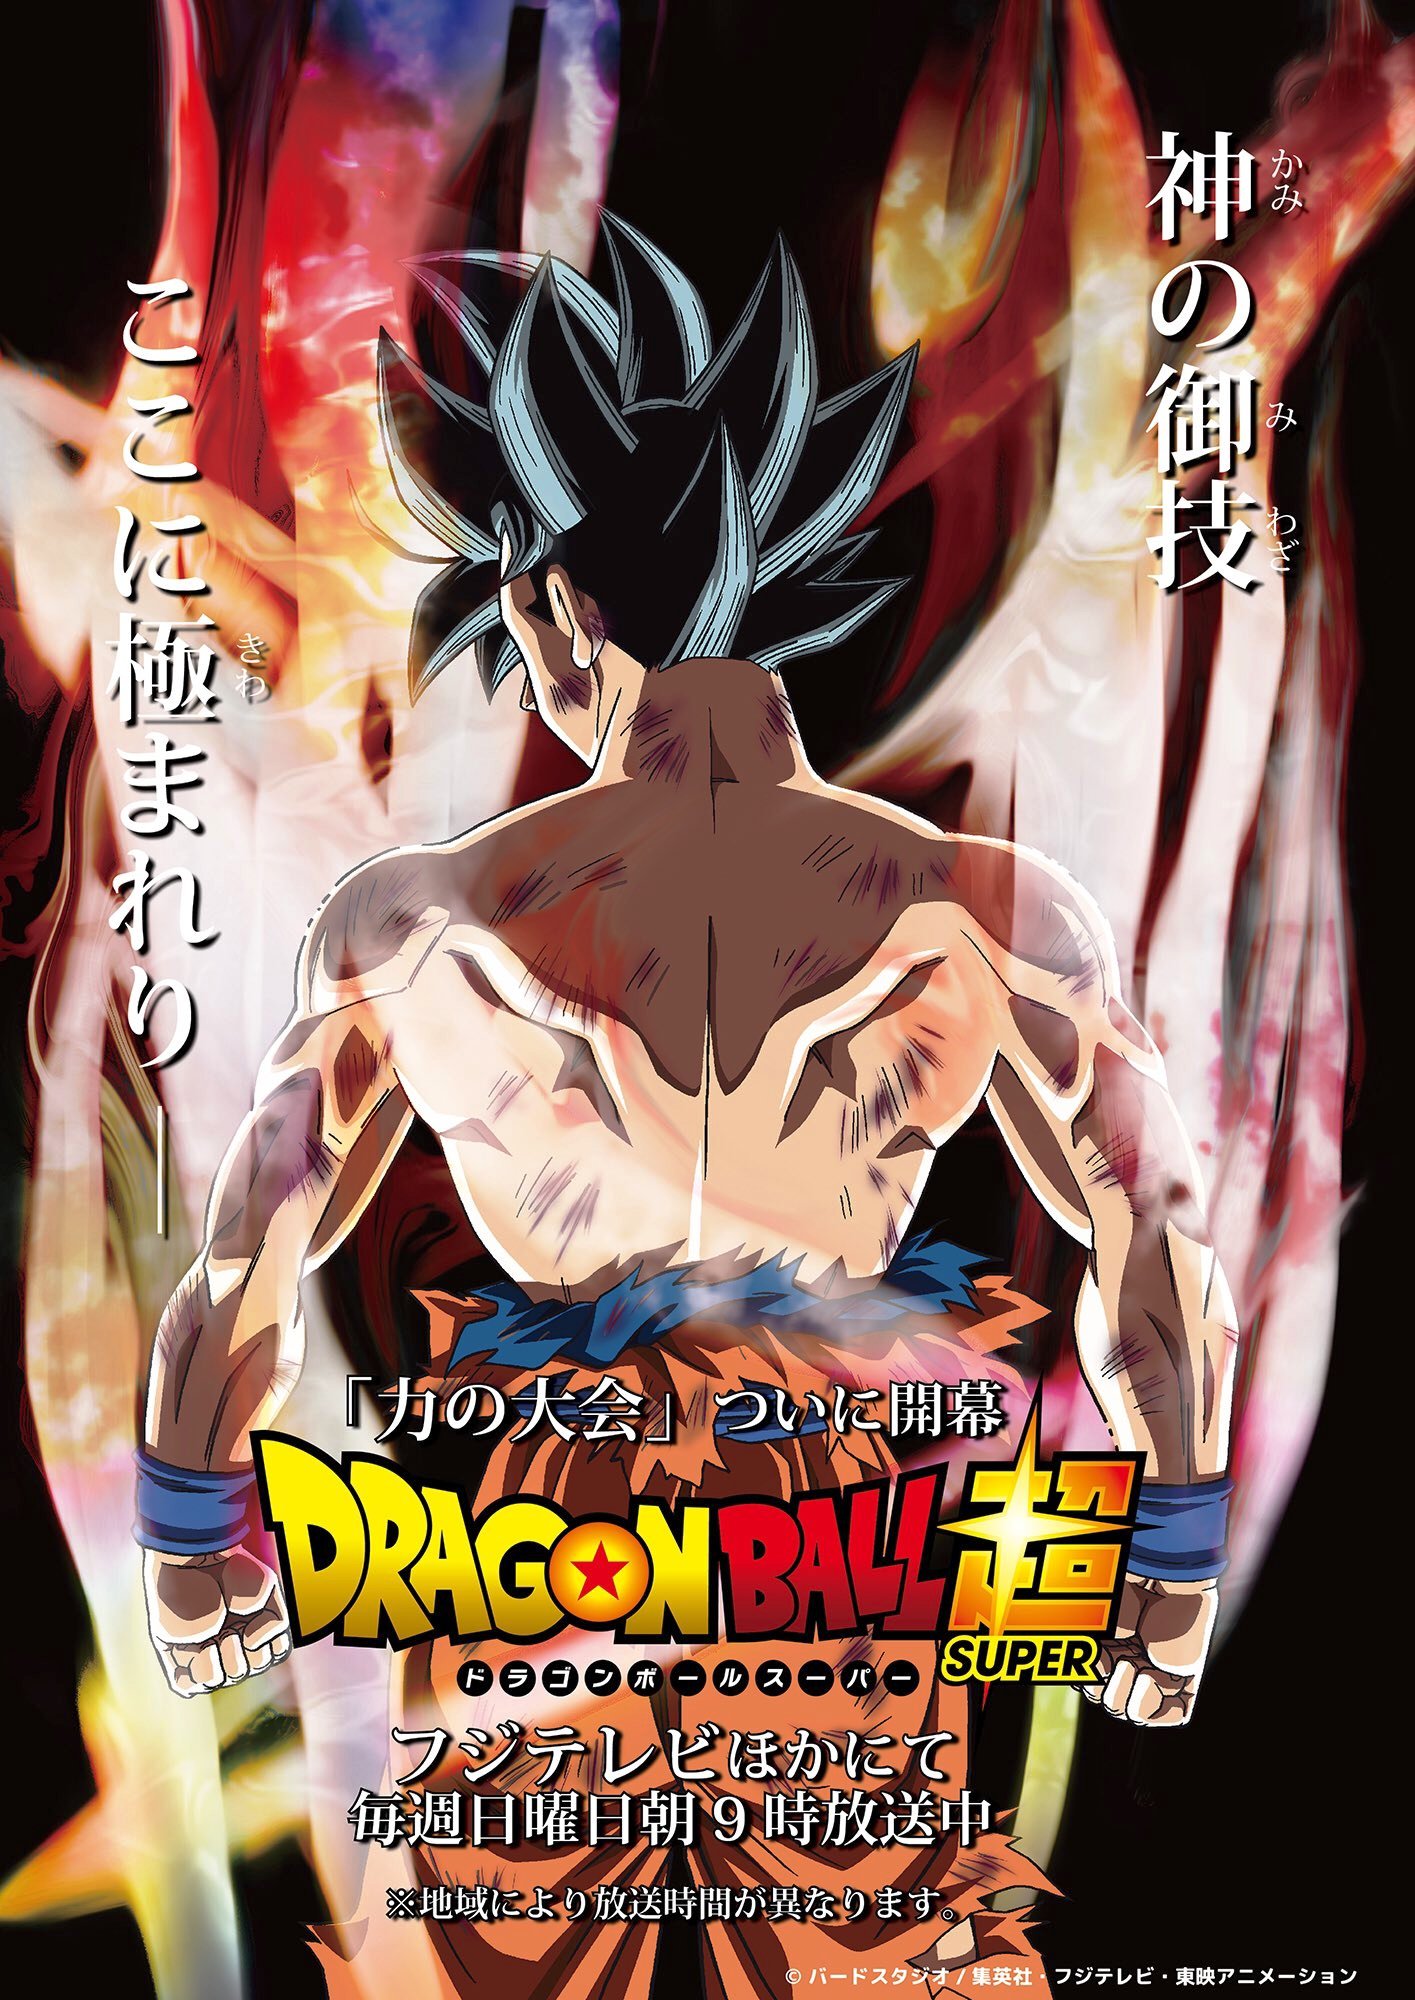 dragon ball super wallpaper,anime,poster,flesh,dragon ball,fictional character